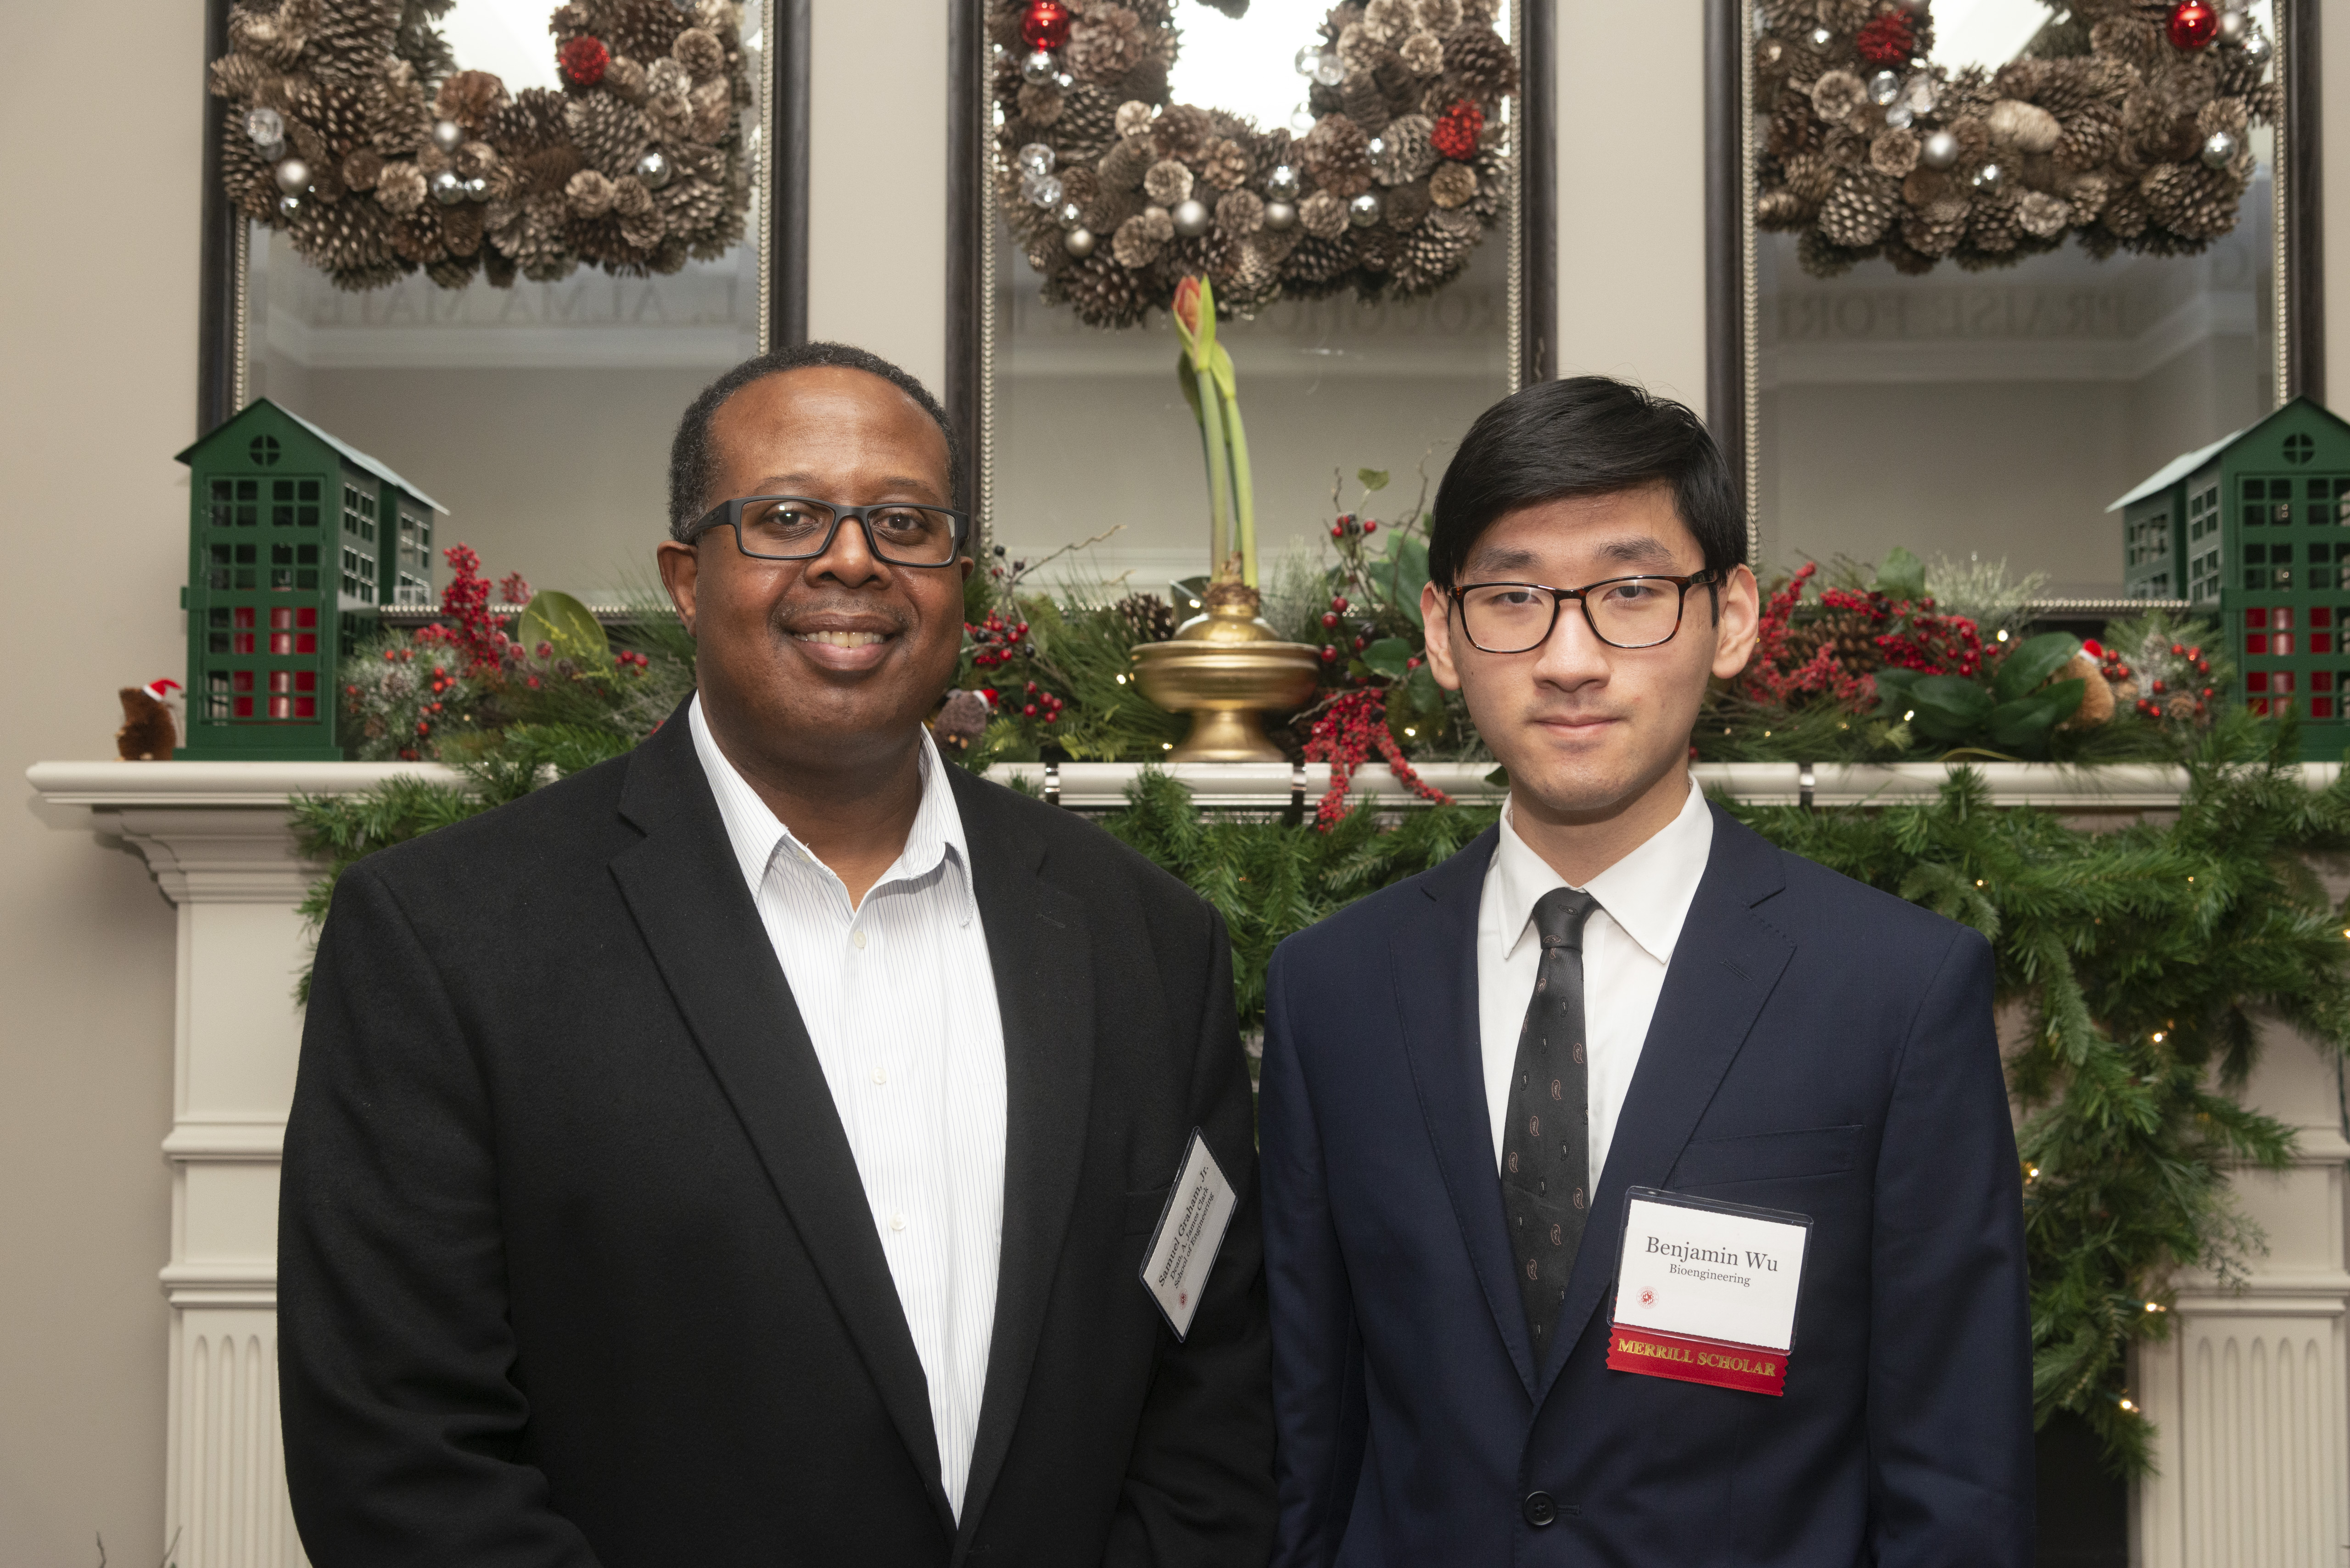 Merrill Scholar Benjamin Wu with Dean Samuel Graham, Jr.